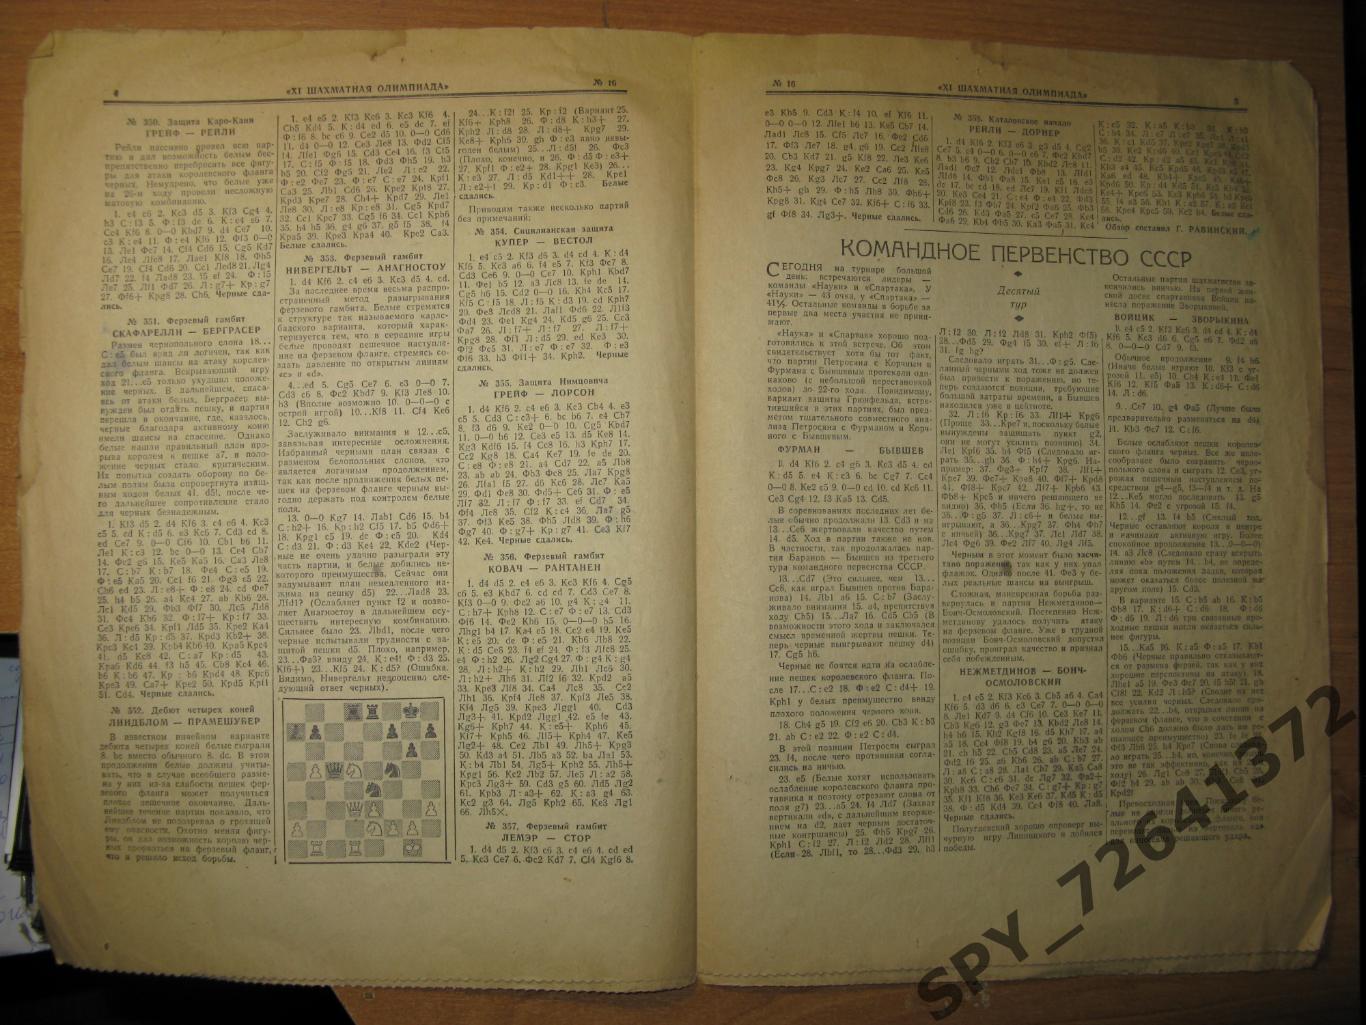 Бюллетень комитета по физкультуре и спорту 21 шахматная олимпиада.1954 г. N16 1